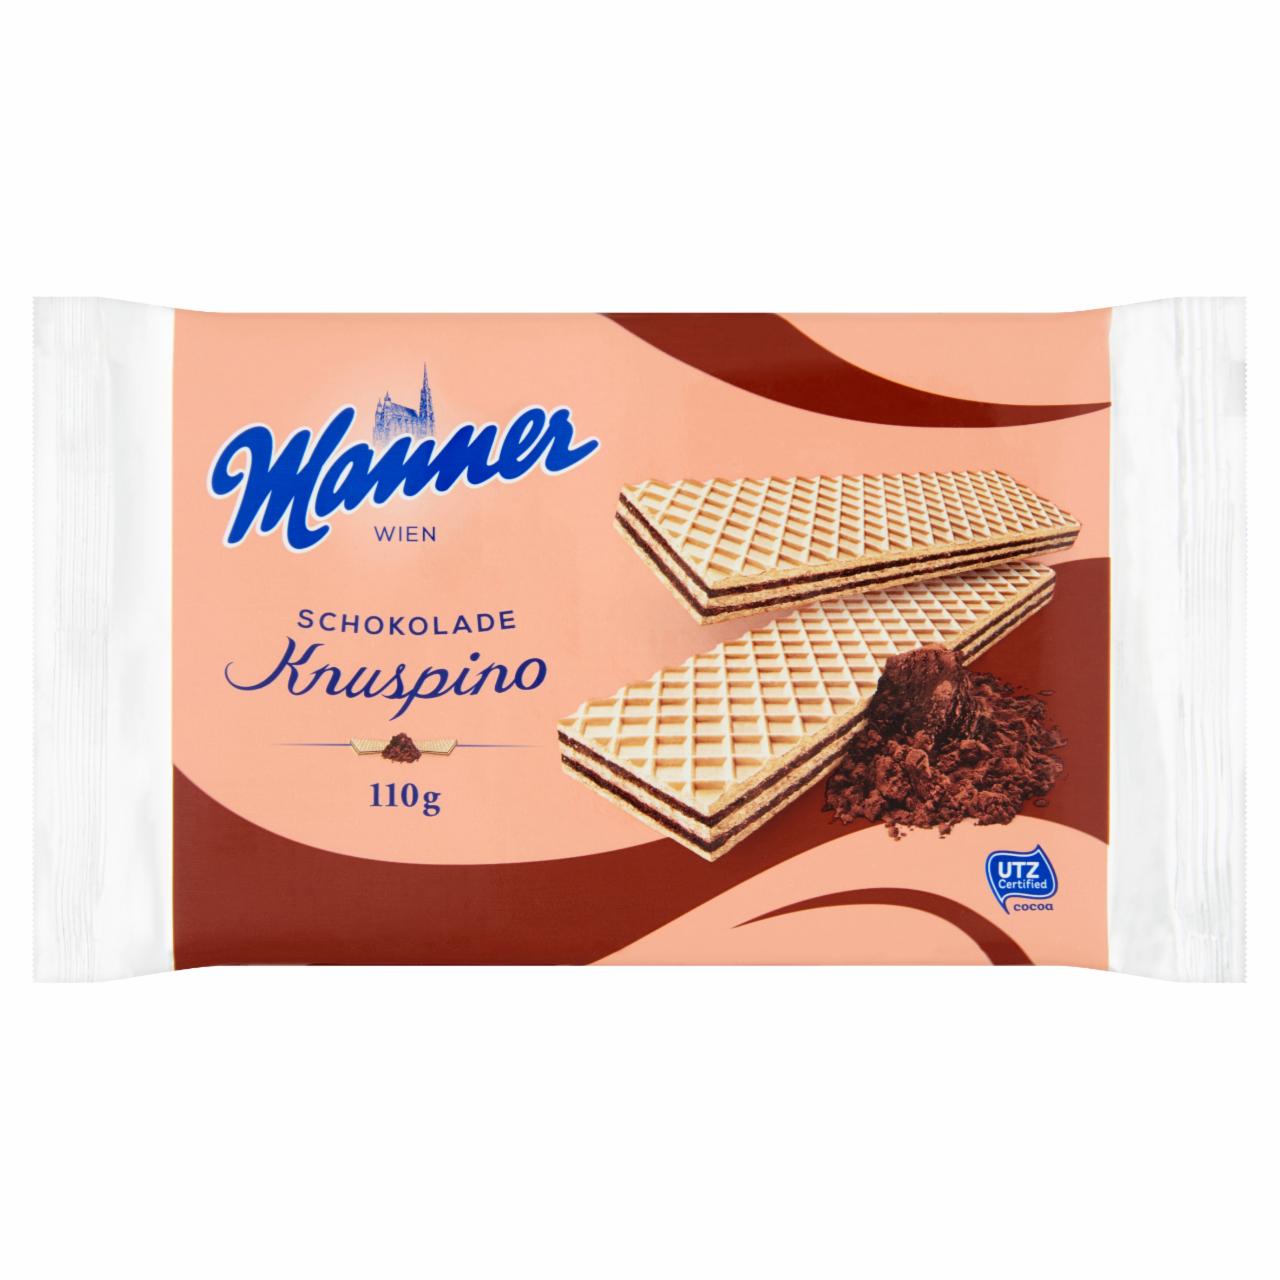 Photo - Manner Knuspino Chocolate Cream Filled Crispy Wafers 110 g